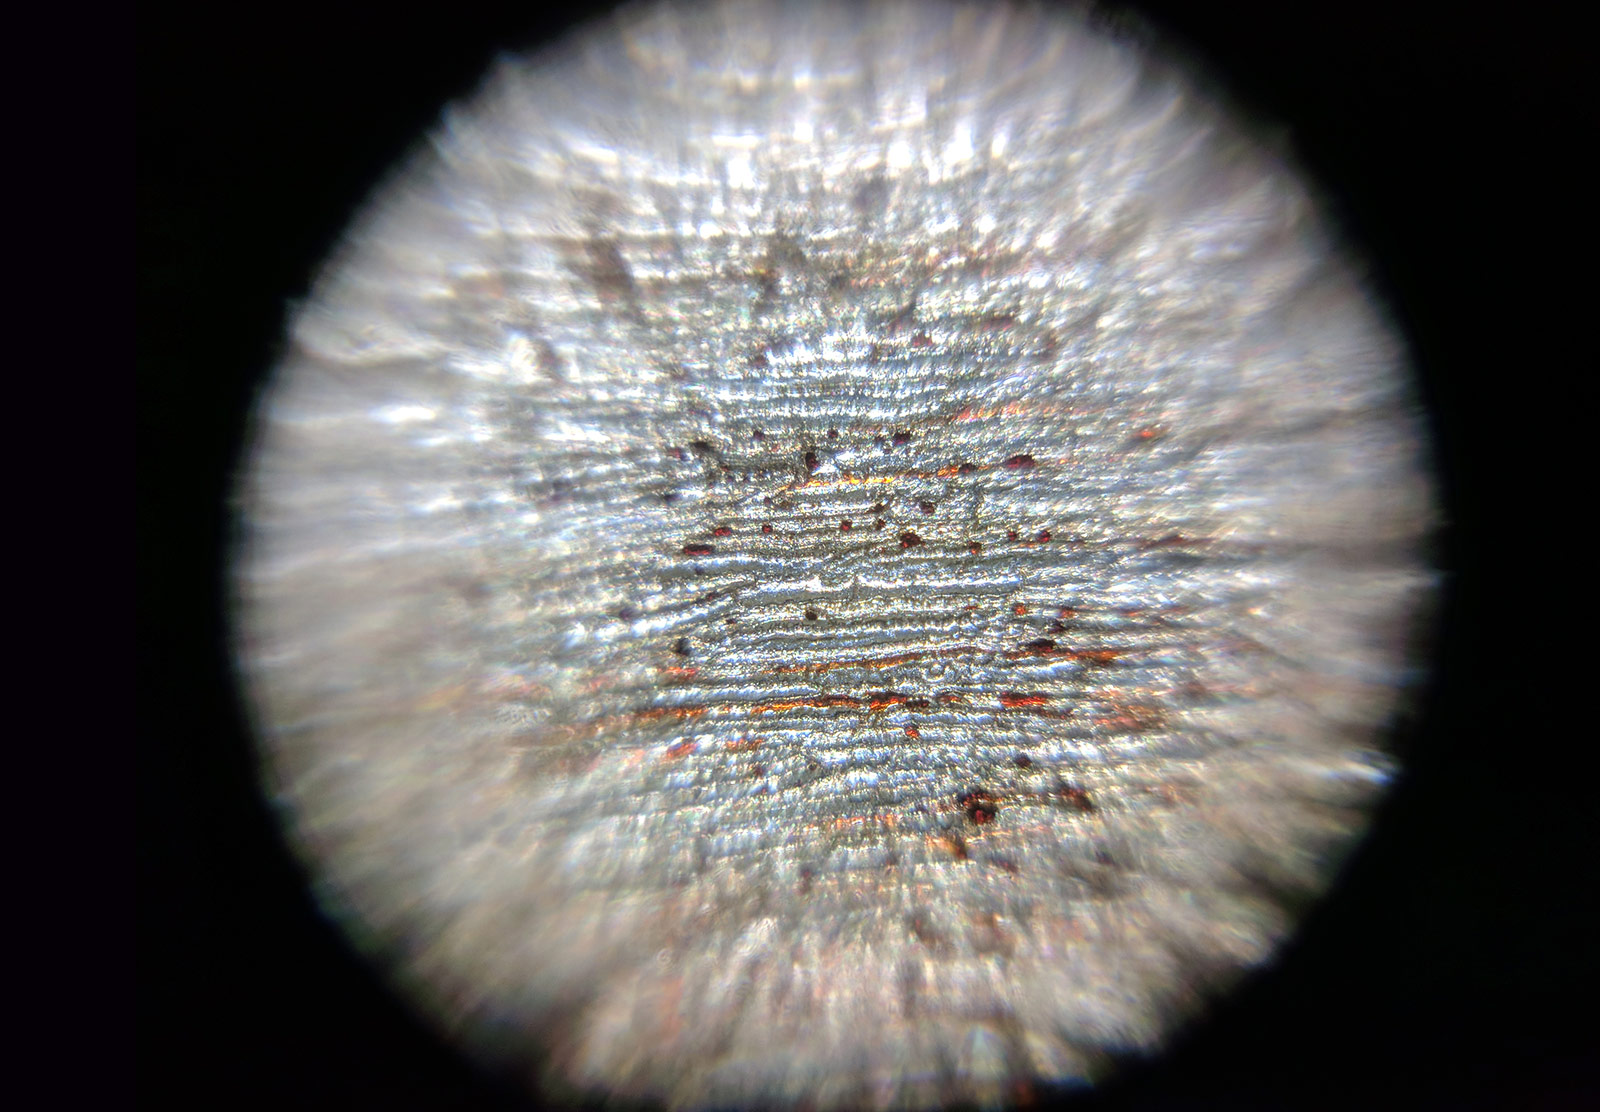 Pinecone seed fibres under microscope